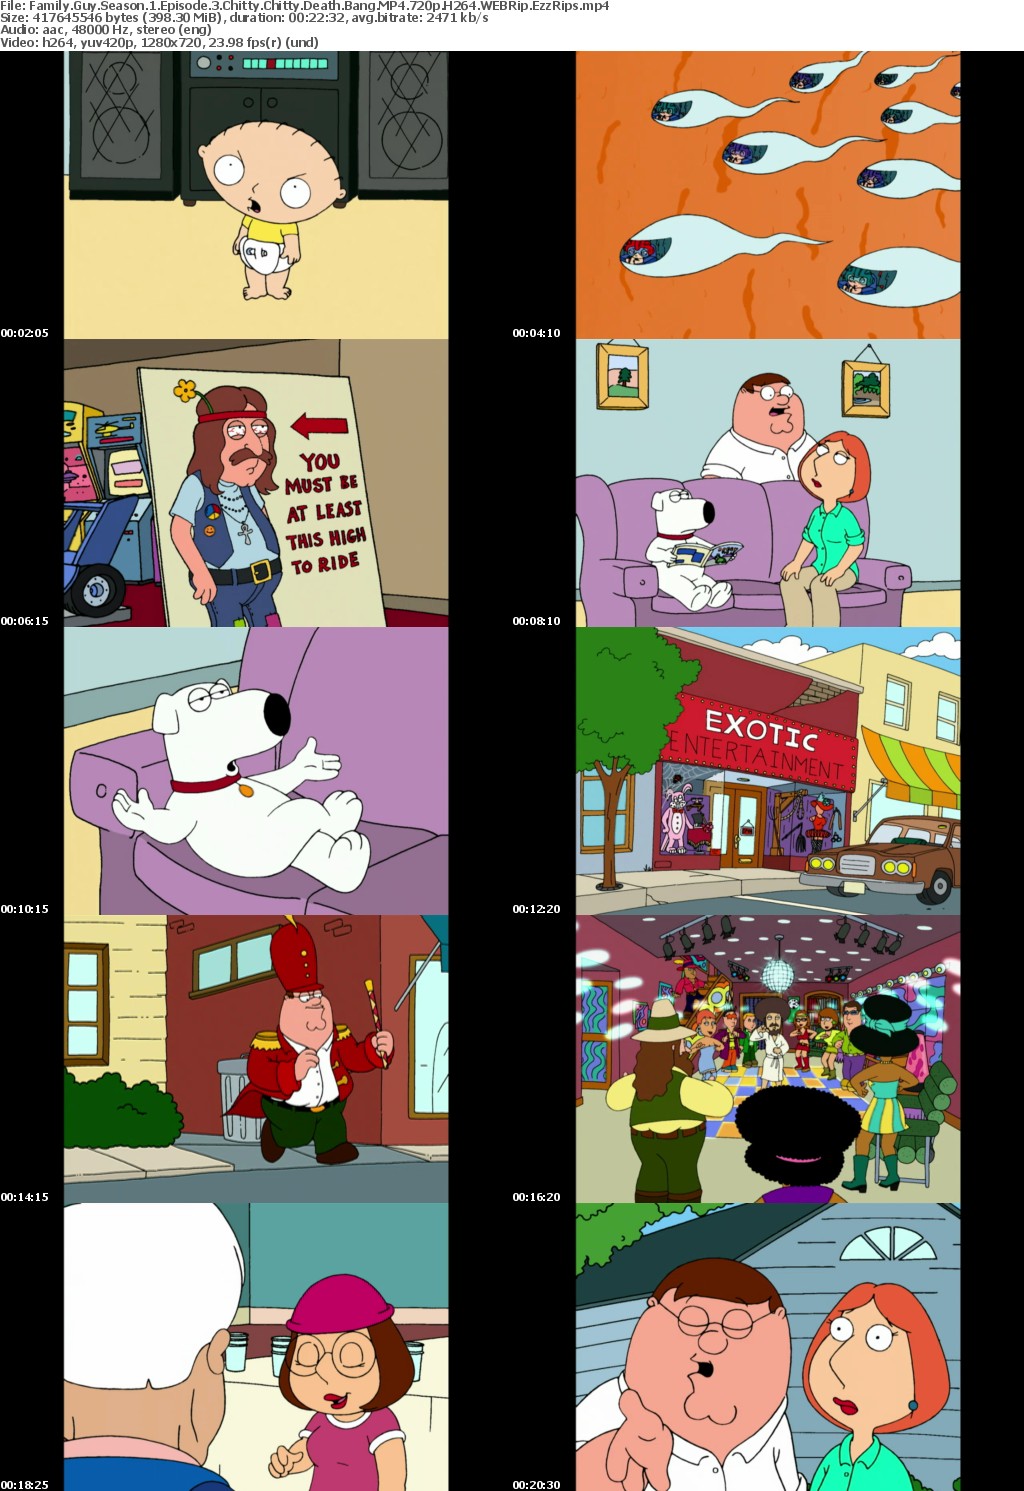 Family Guy Season 1 Episode 3 Chitty Chitty Death Bang MP4 720p H264 WEBRip EzzRips